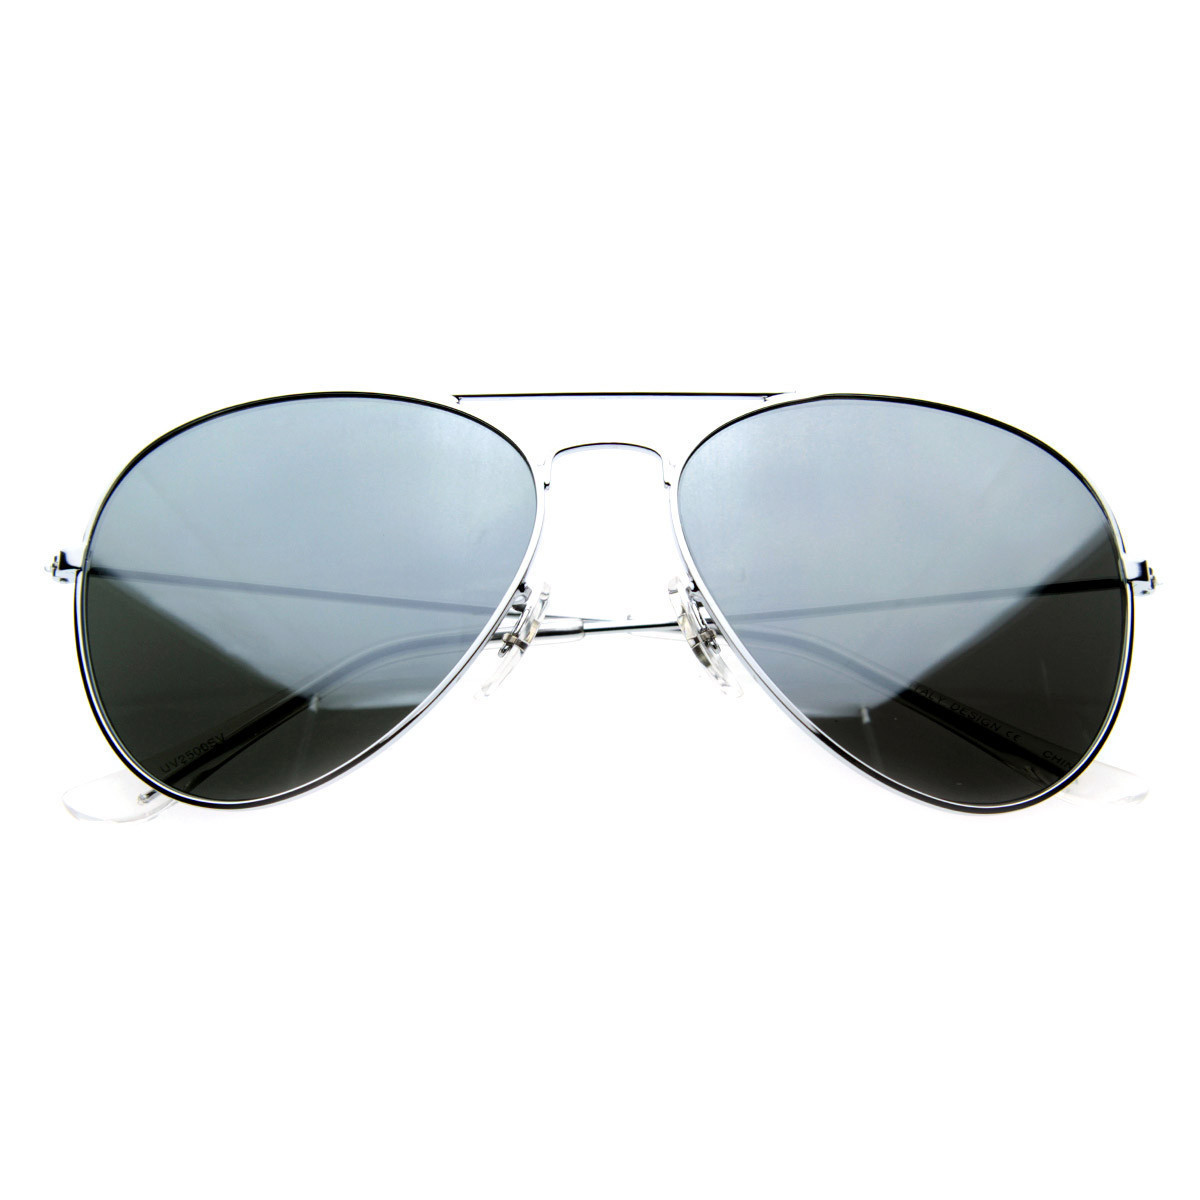 Mirrored Aviators Silver Metal Aviator Sunglasses - 1476